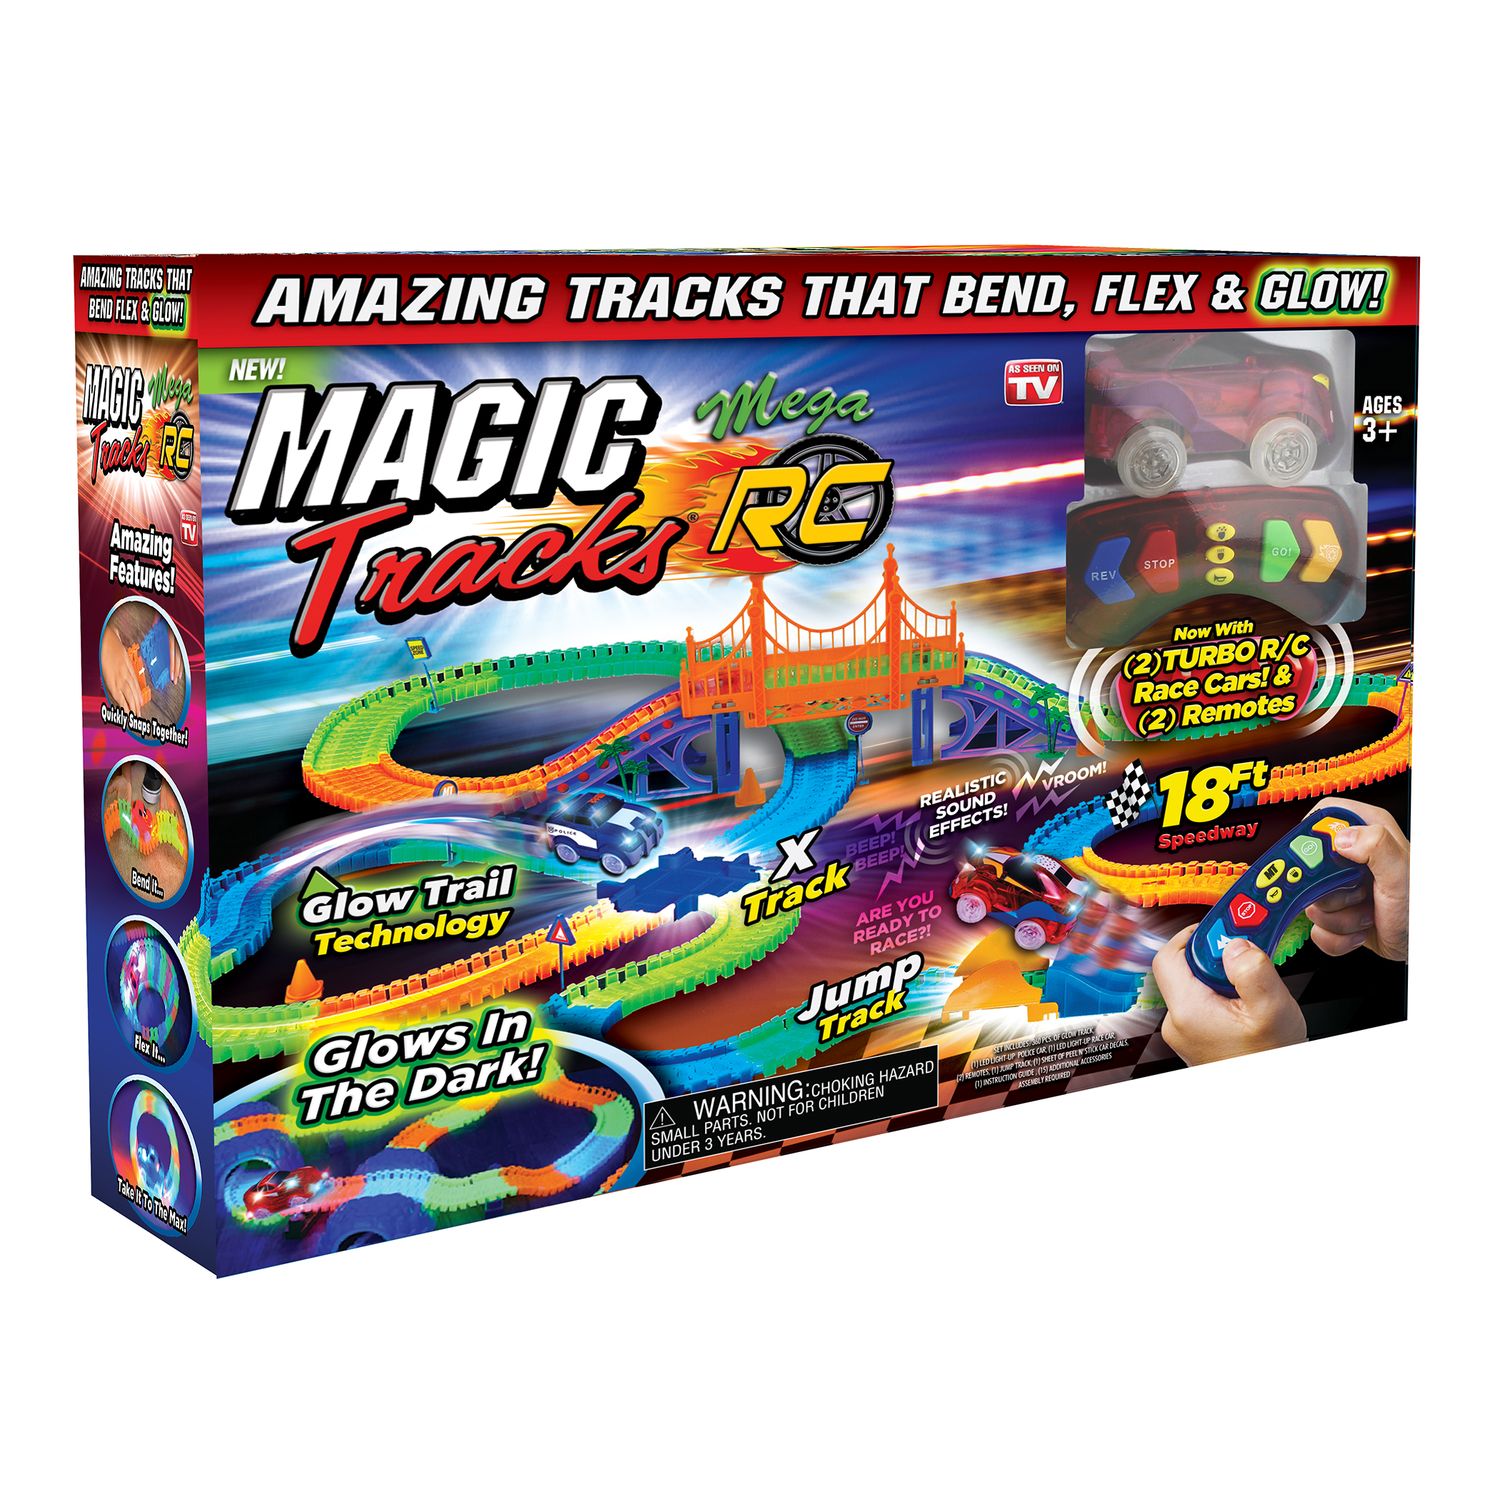 magic tracks mega rc